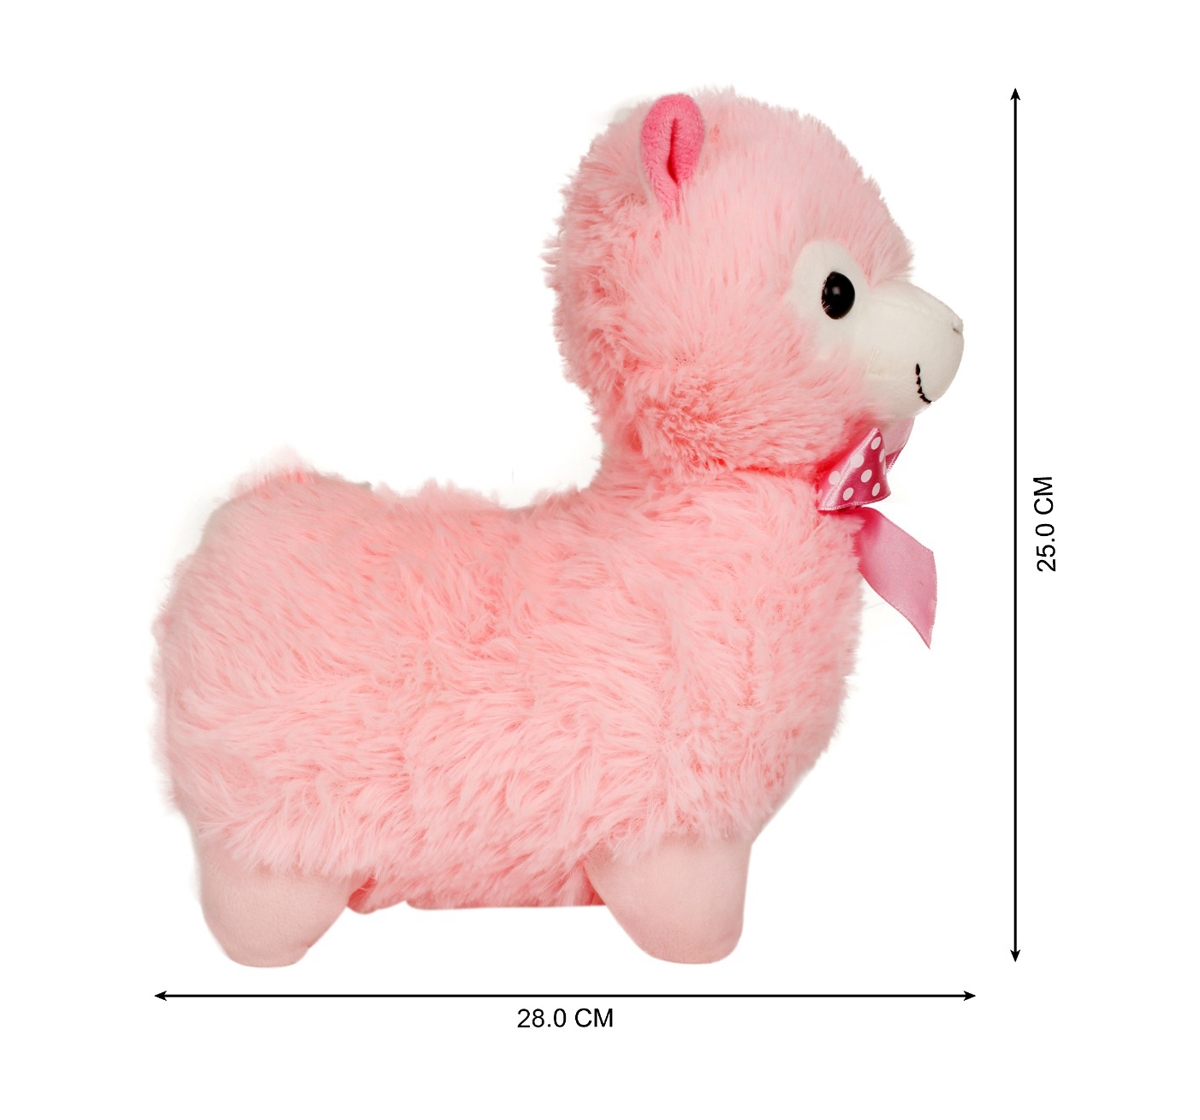 Fuzzbuzz | Fuzzbuzz Llama Stuffed Plush Toy - Pink - 28Cm Quirky Soft Toys for Kids age 0M+ - 28 Cm (Pink) 2